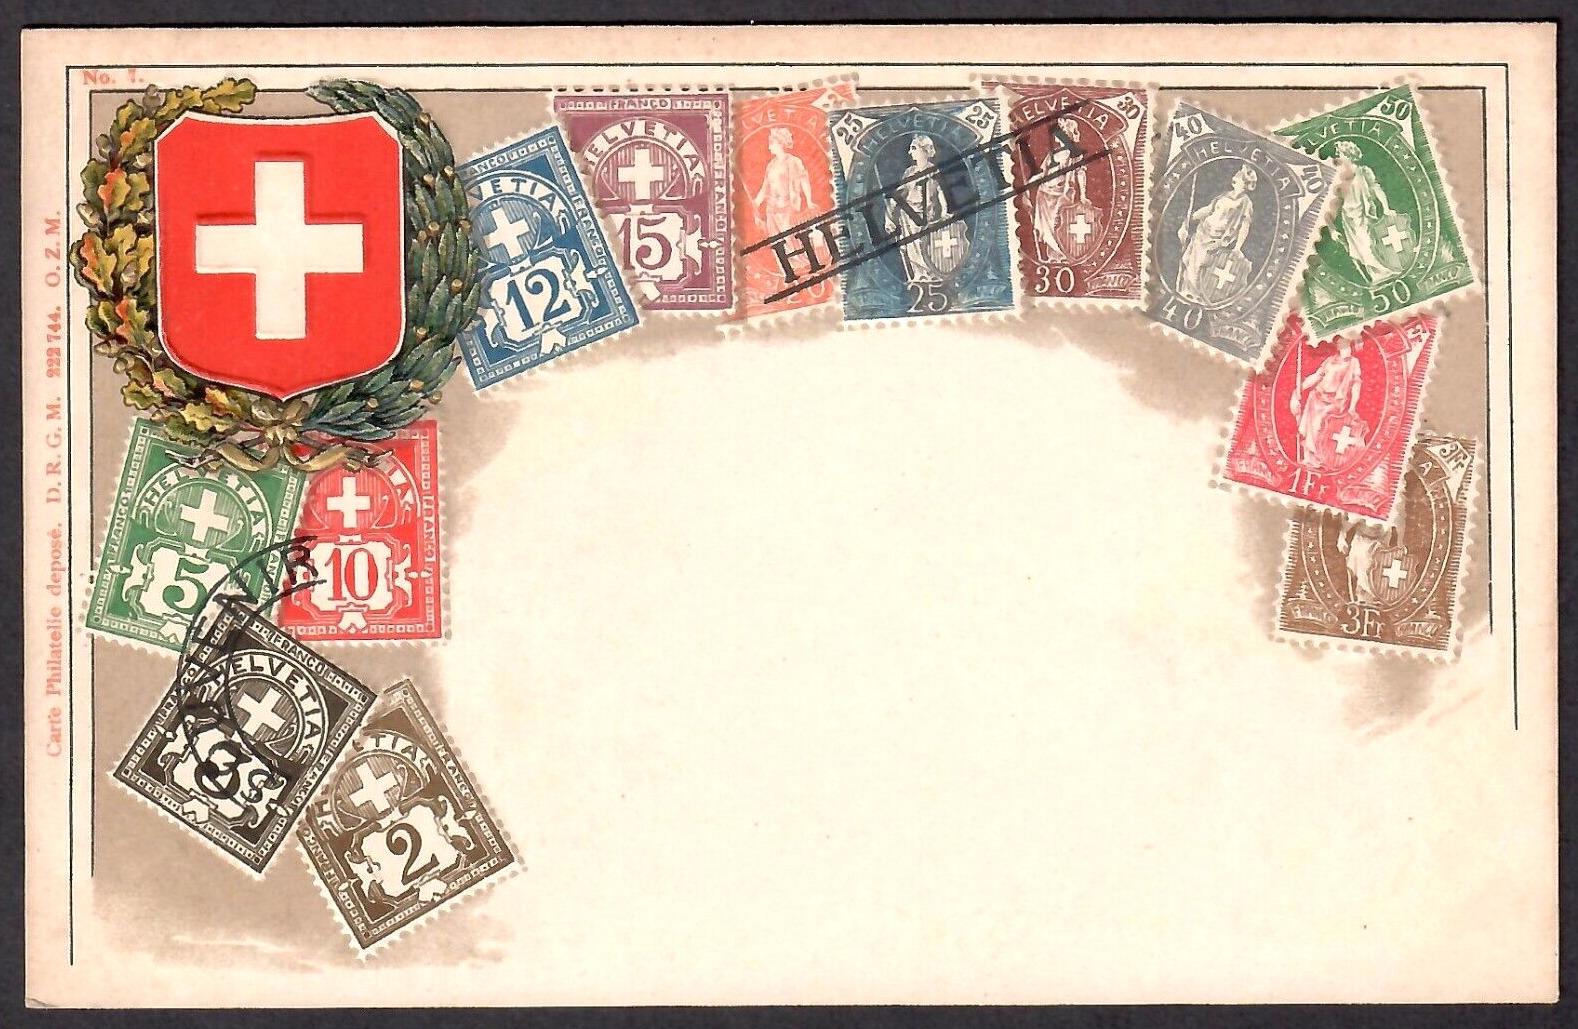 Switzerland Postcard Unused, Ottmar Zieher Series No. 7 Stamps of Late 1800s